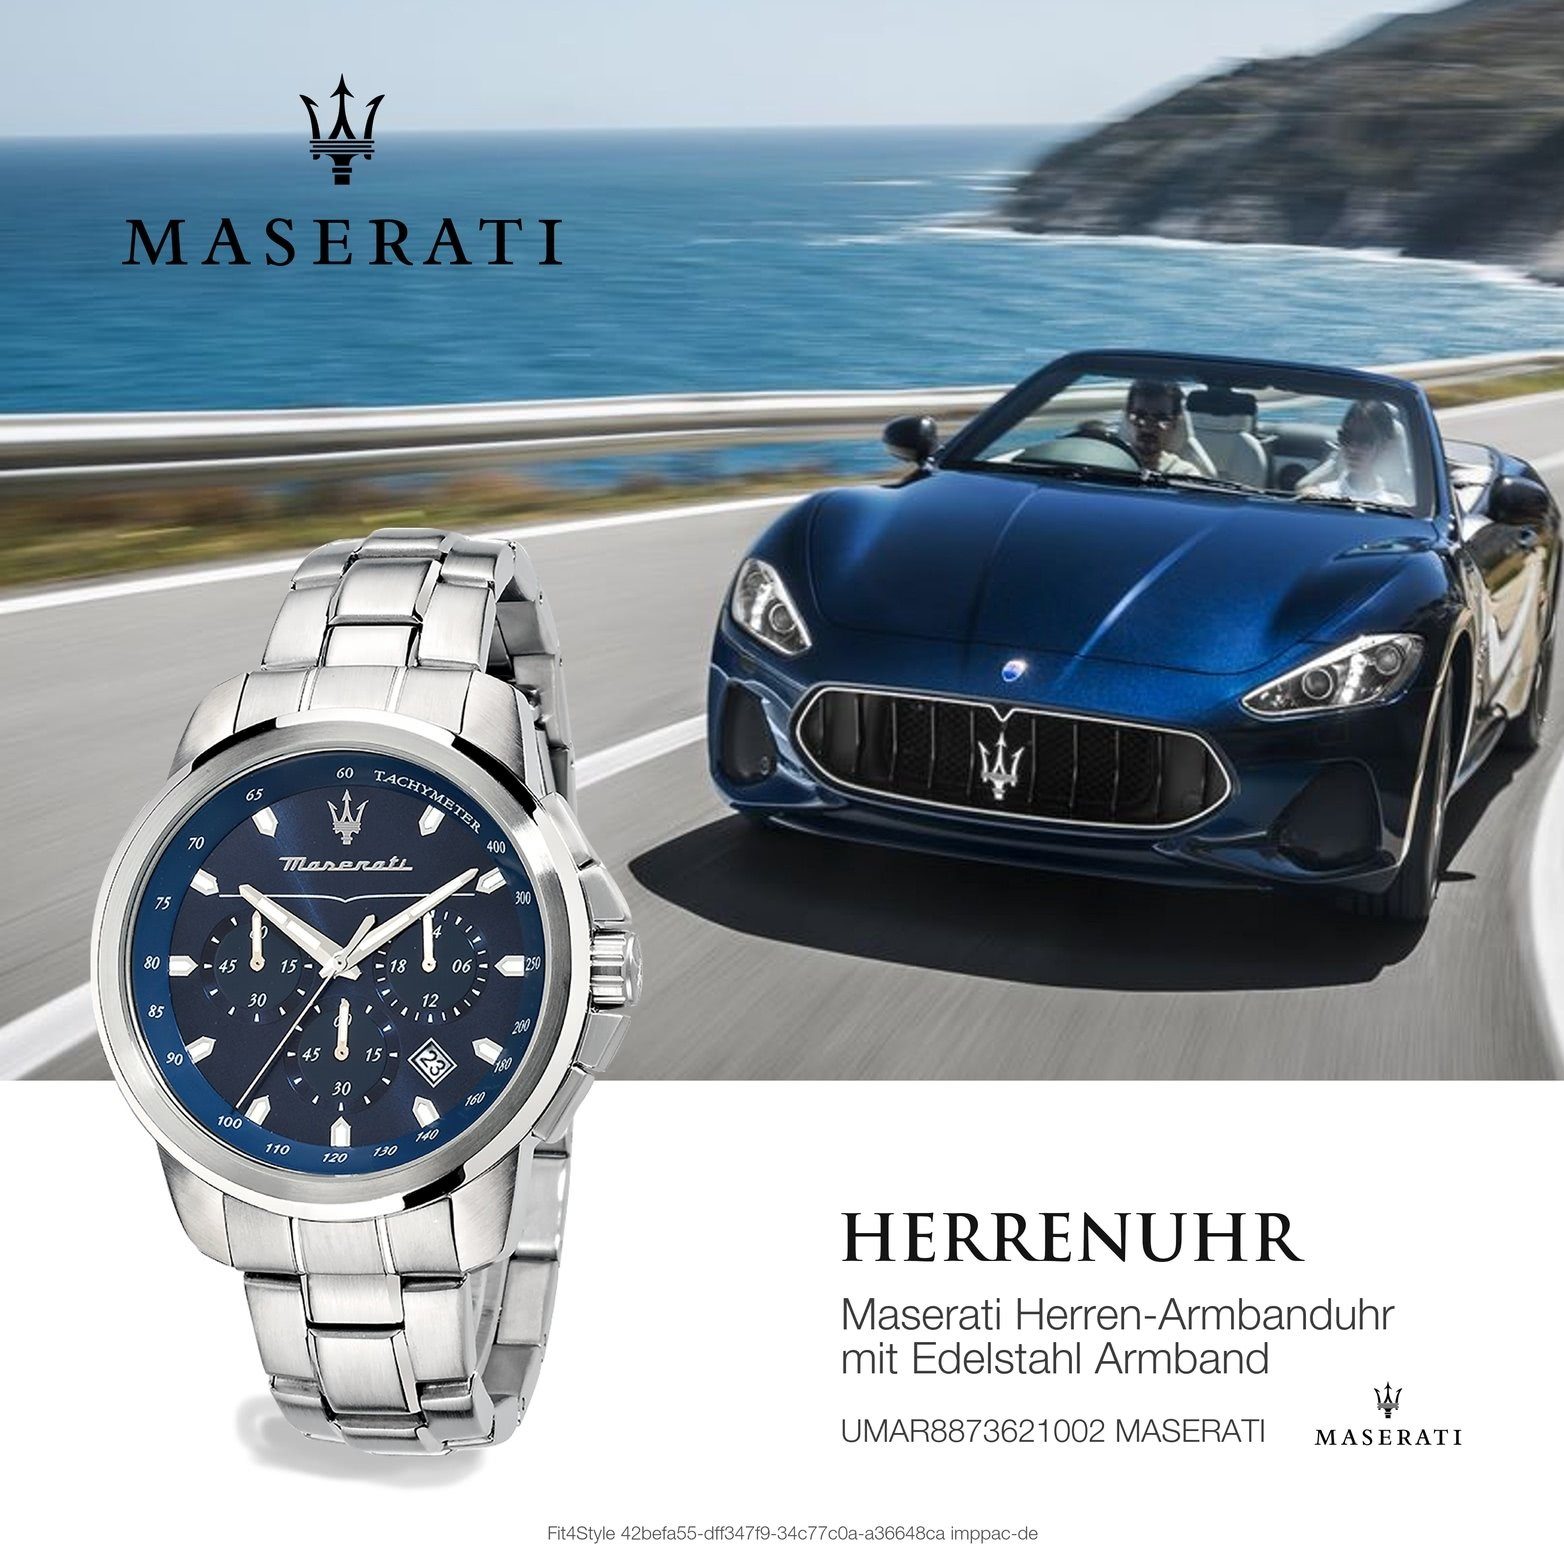 Chronograph (ca. 52x44mm) MASERATI Edelstahl Armband-Uhr, Edelstahlarmband, Maserati groß rundes Gehäuse, Herrenuhr blau